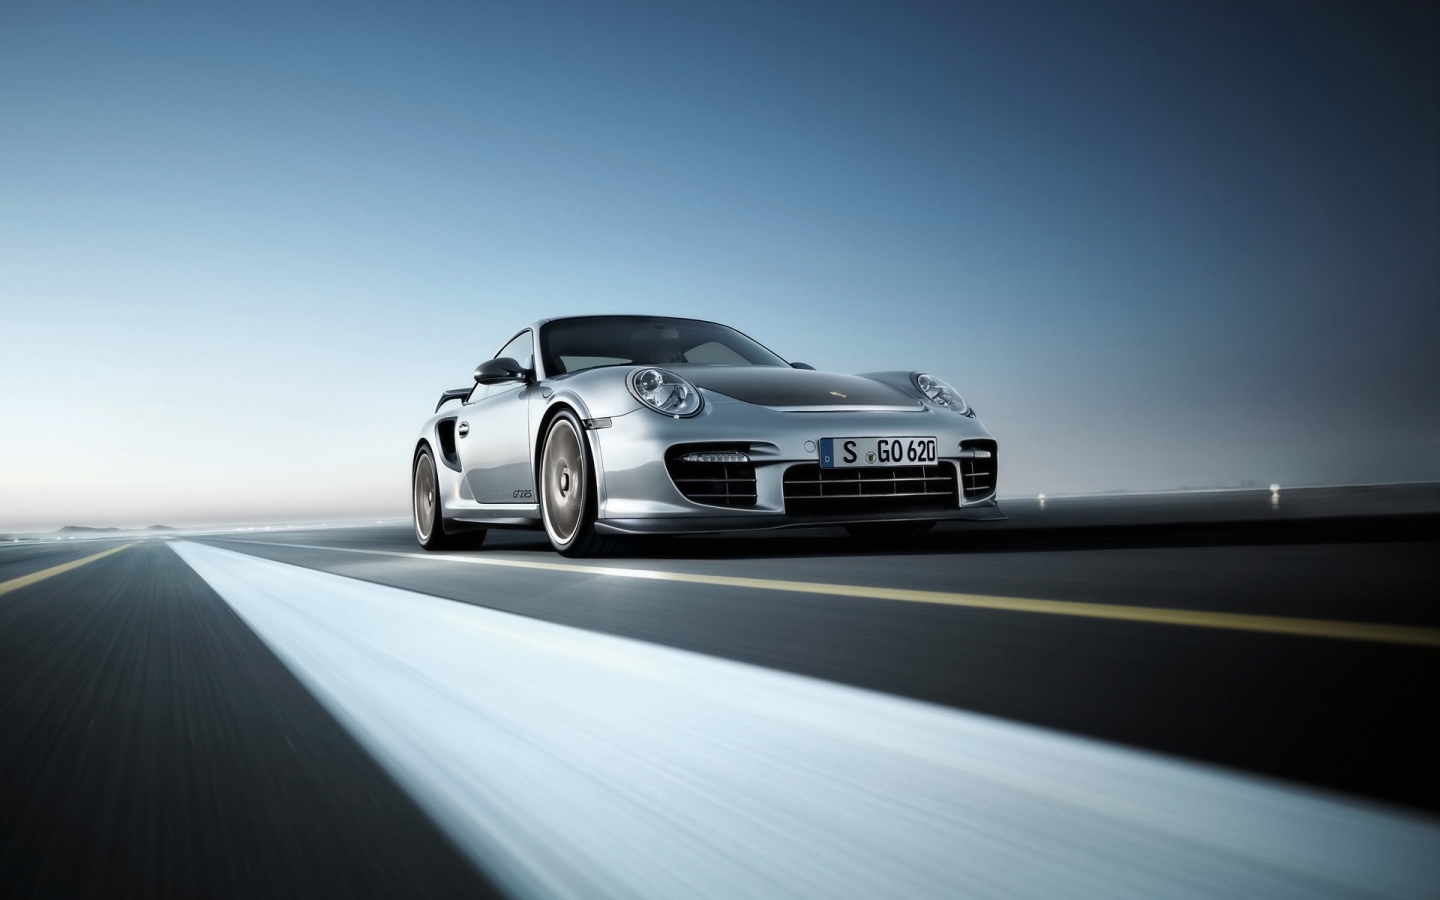 Porsche 911 GT2 RS 2011 Front for 1440 x 900 widescreen resolution